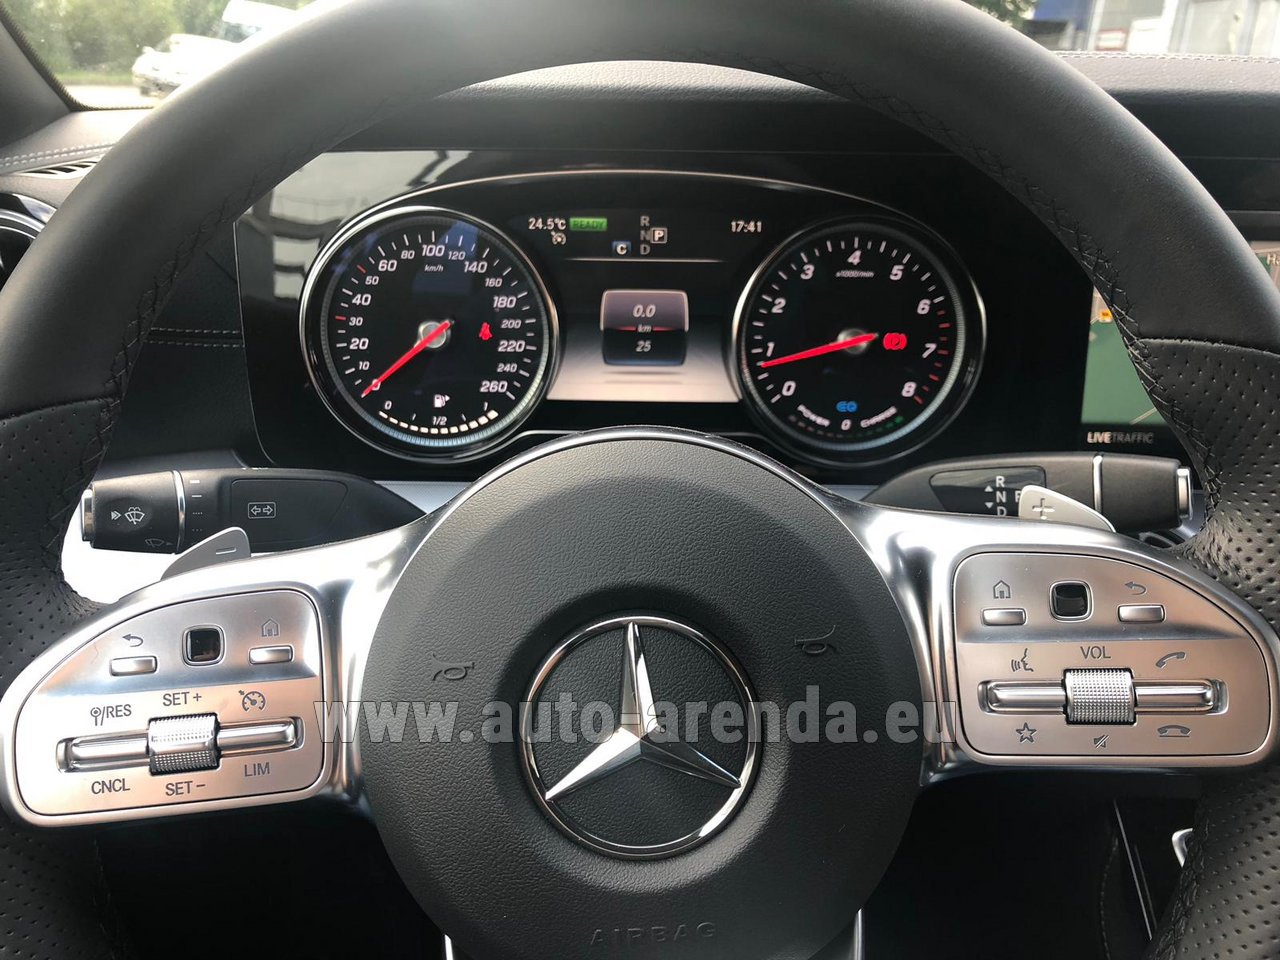 Rent car Mercedes-benz E Class W213 - From 40 €/Day